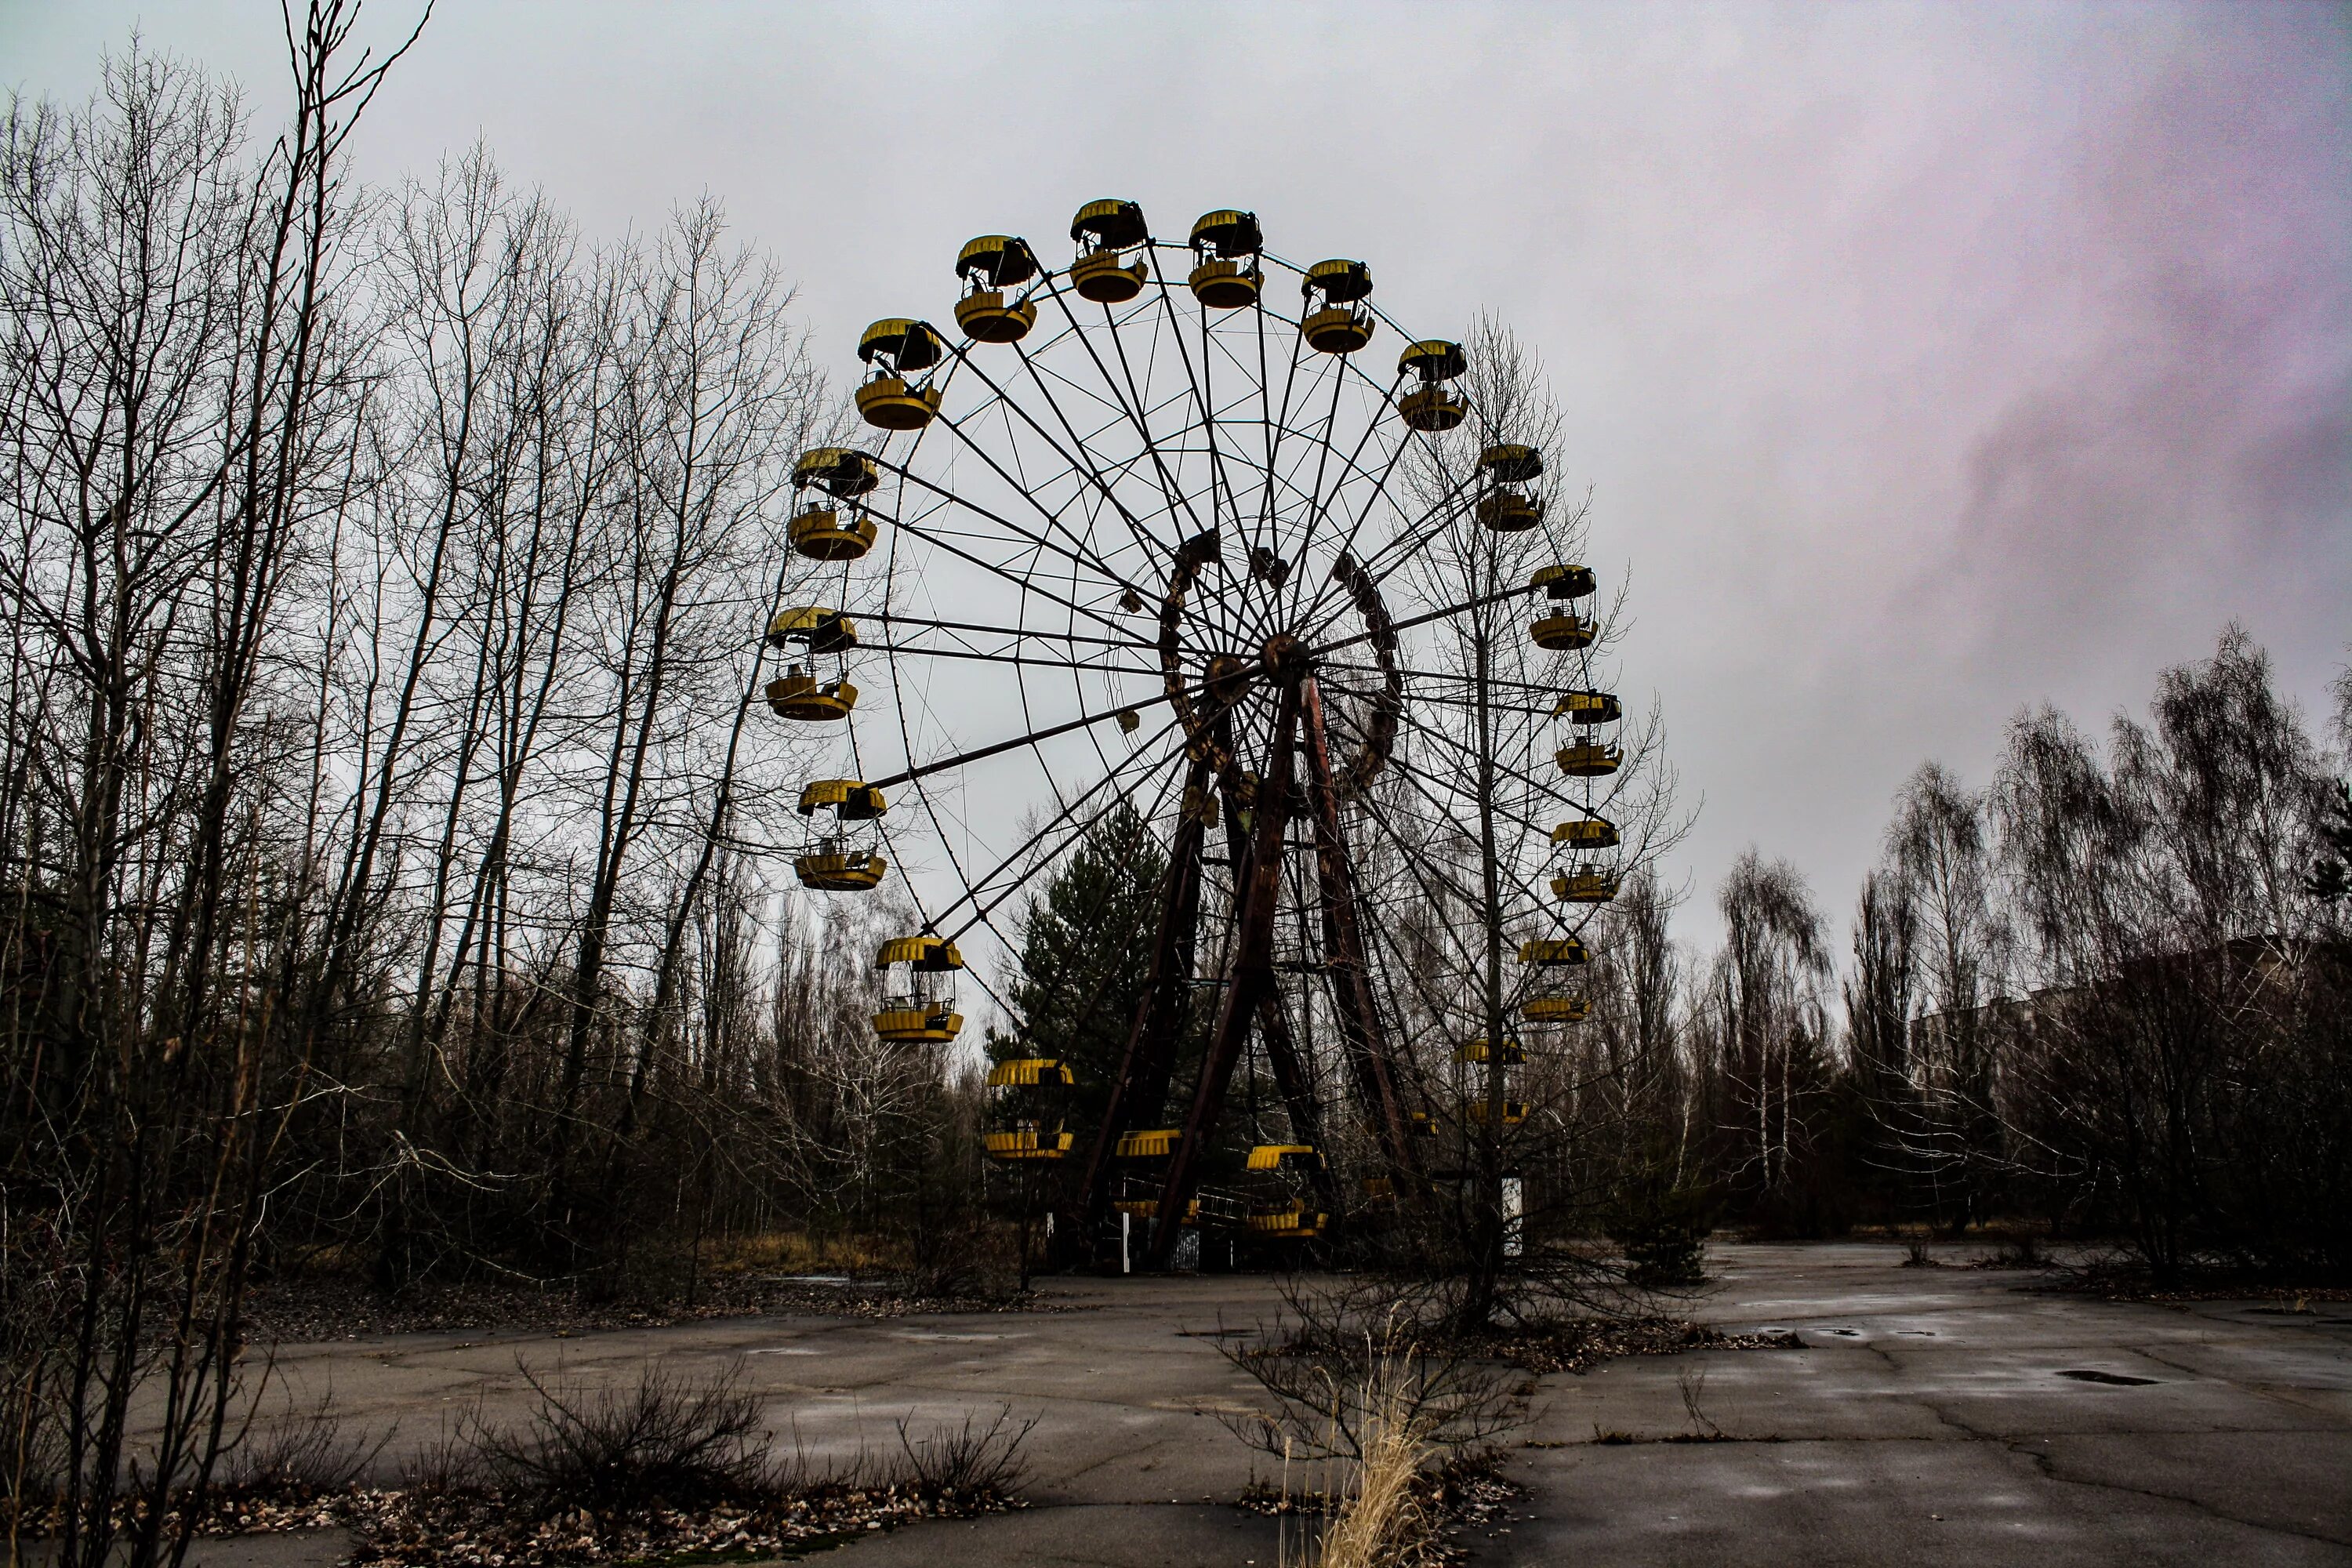 Припять Чернобыль ЧАЭС зона отчуждения. Зона отчуждения город Припять. Чернобыль 1193. Припять 1886. Chernobyl zone